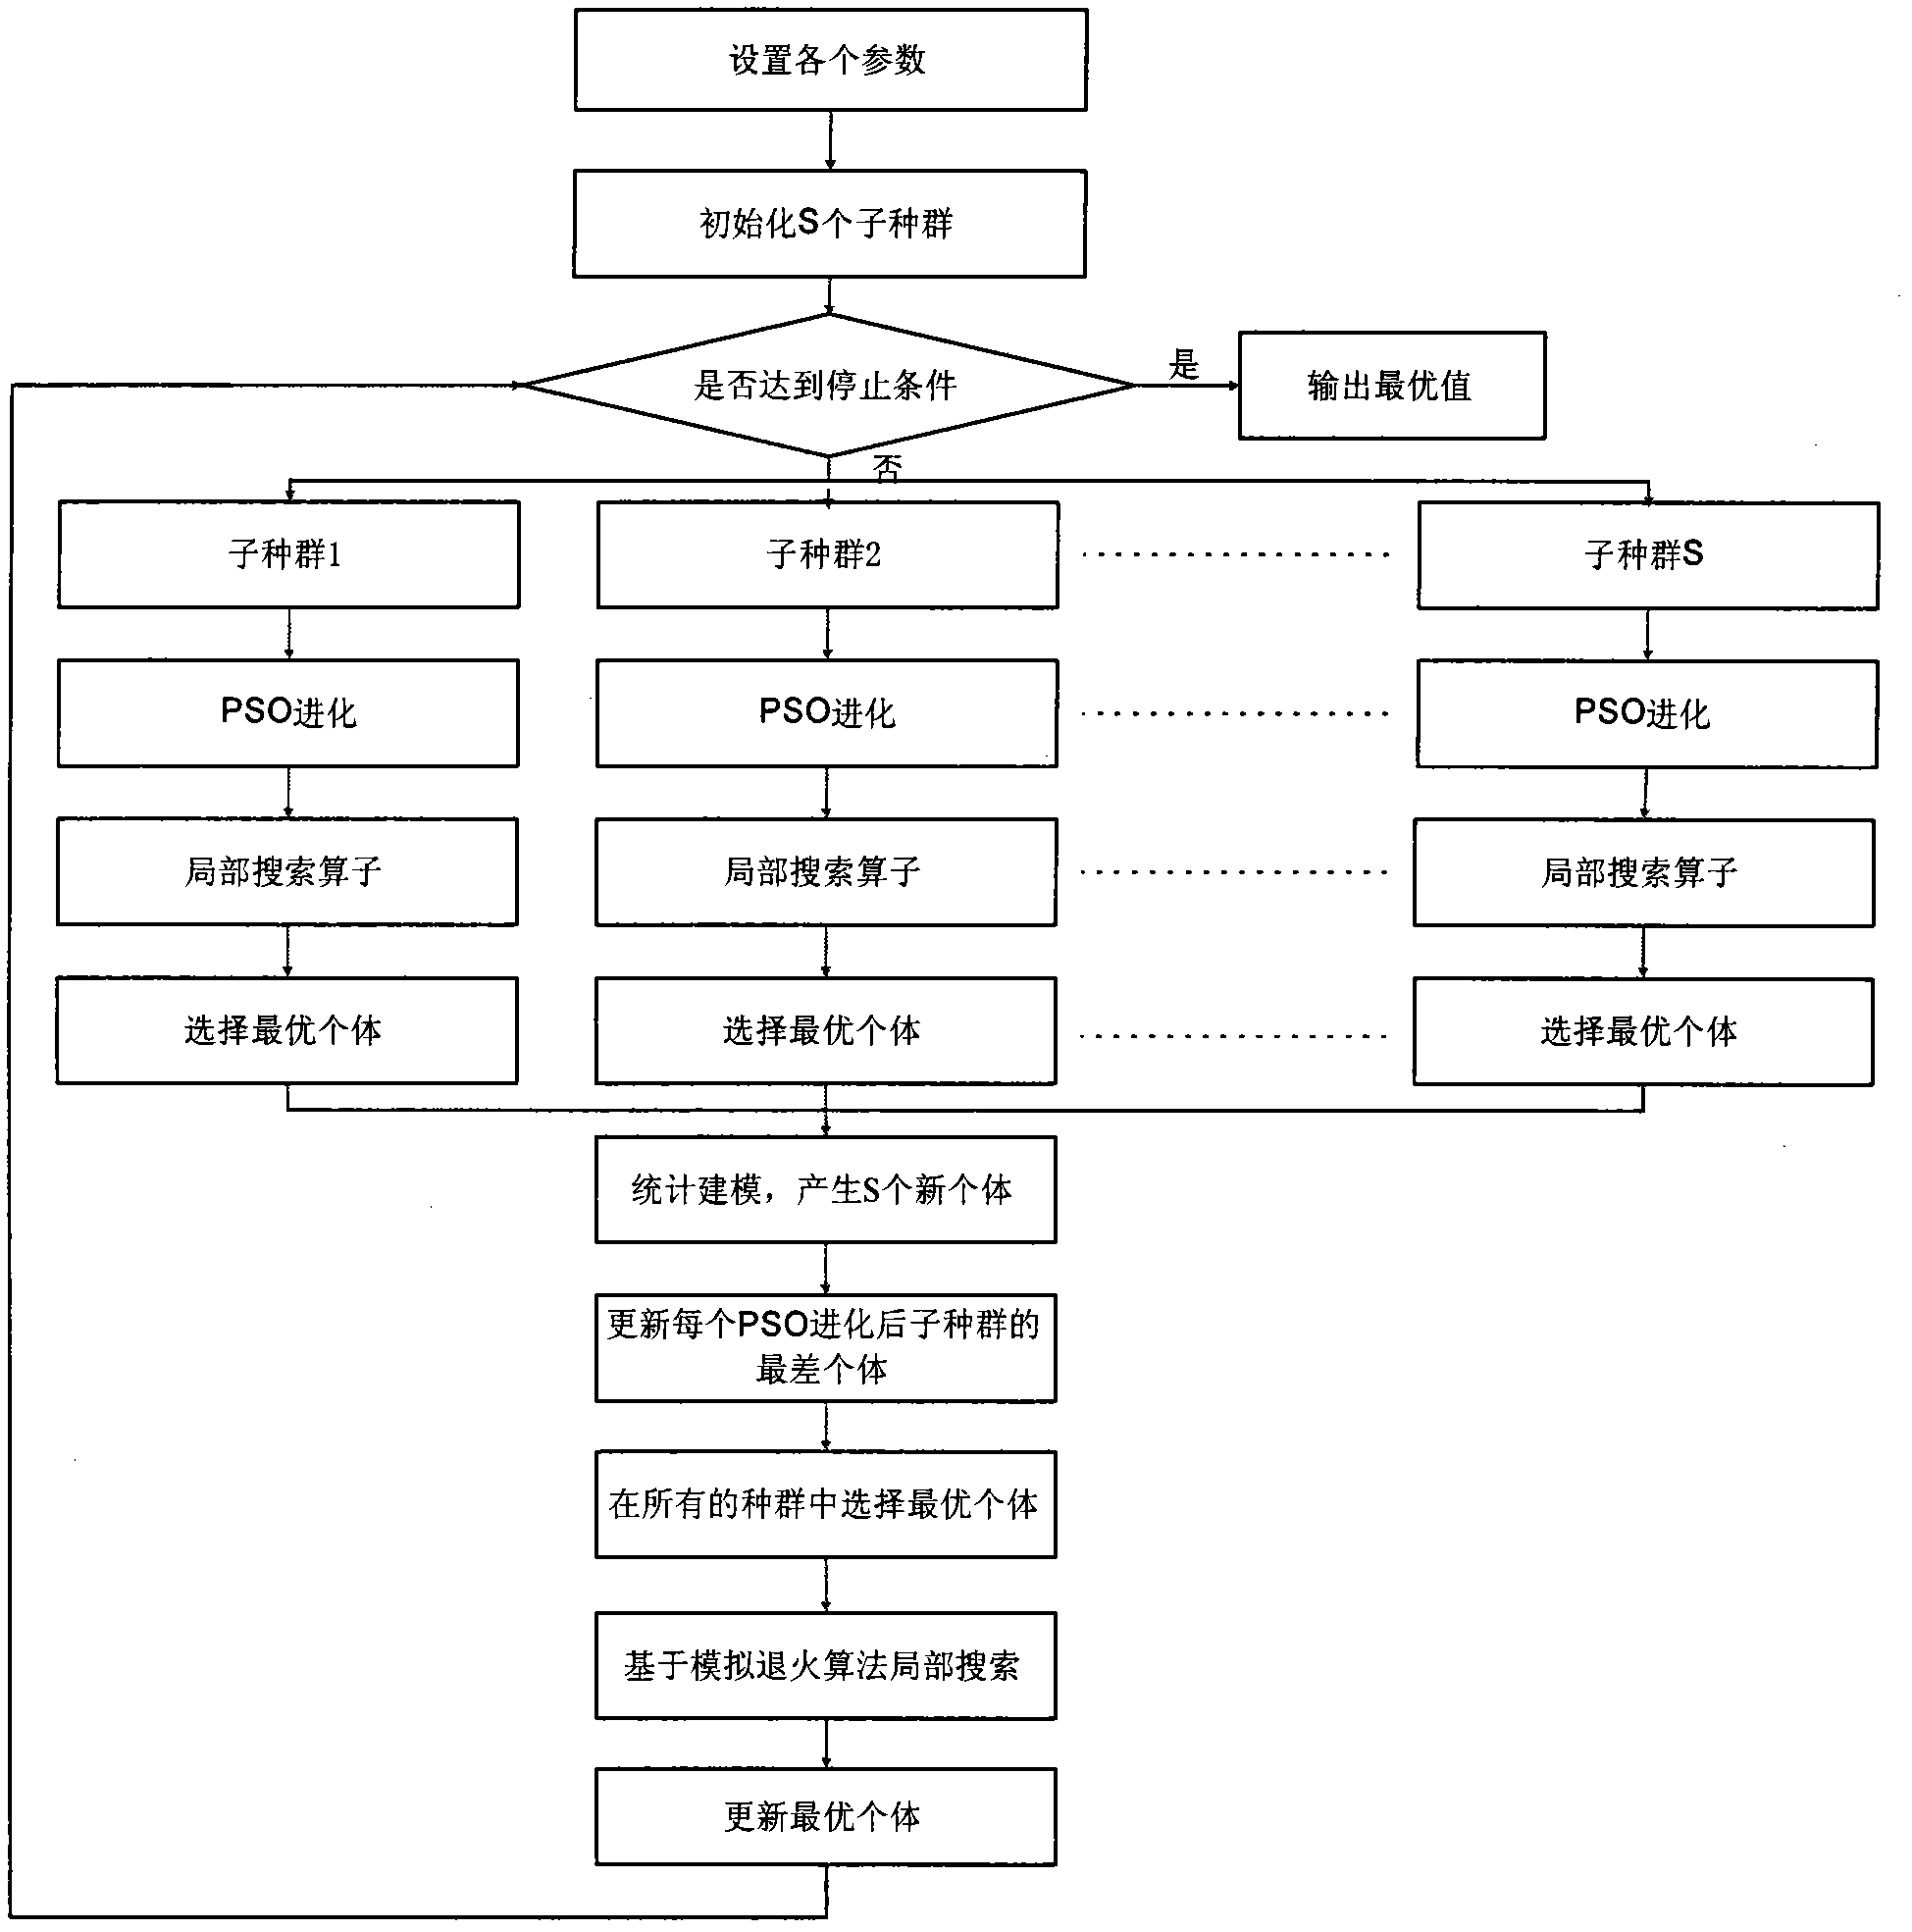 Method for scheduling flow shop based on multi-swarm hybrid particle swarm algorithm